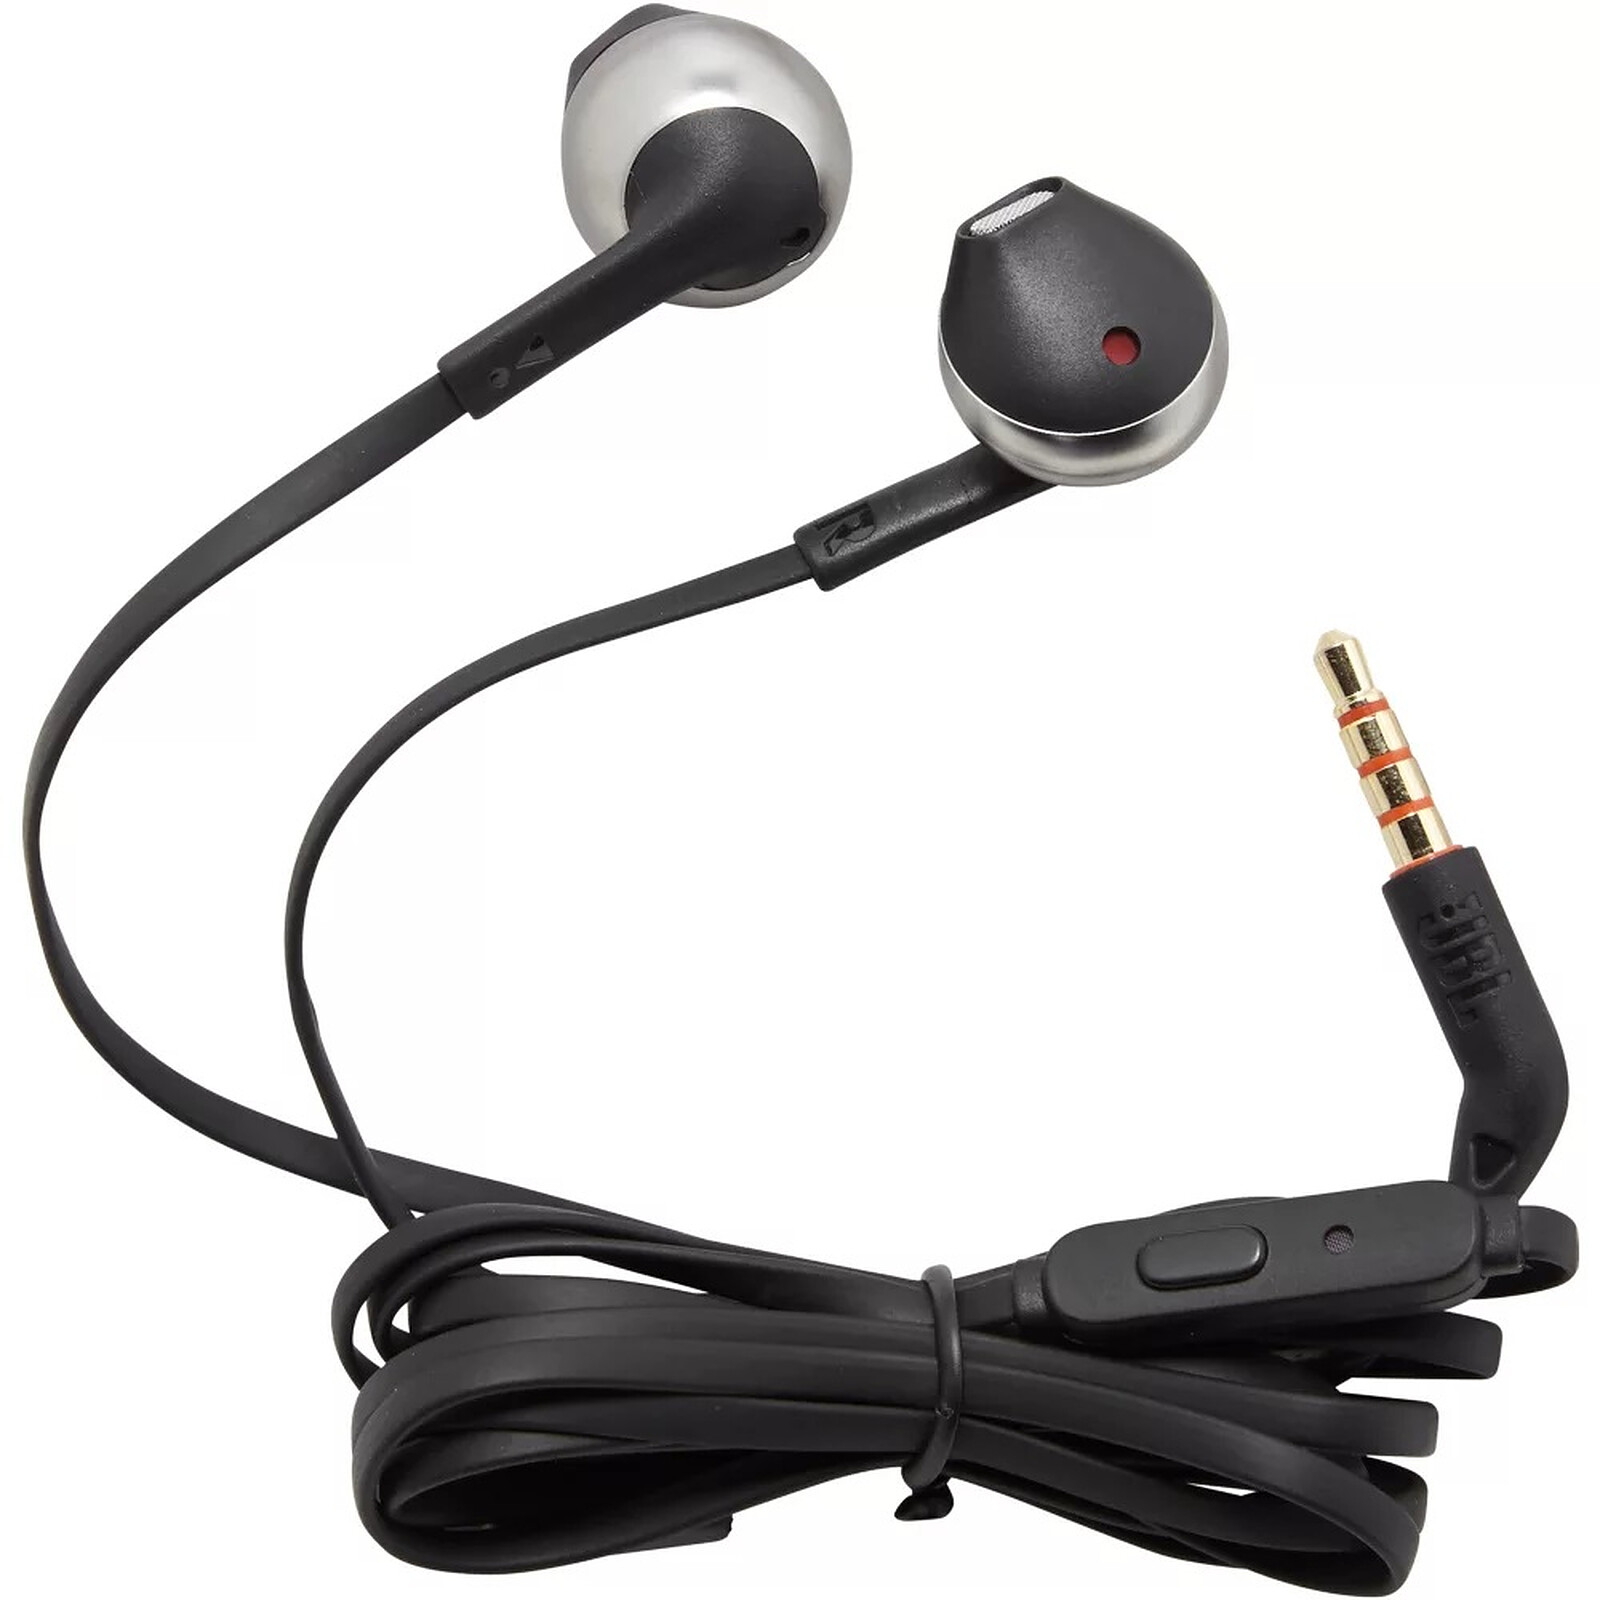 Tune Black LDLC - 205 JBL warranty 3-year Headphones -